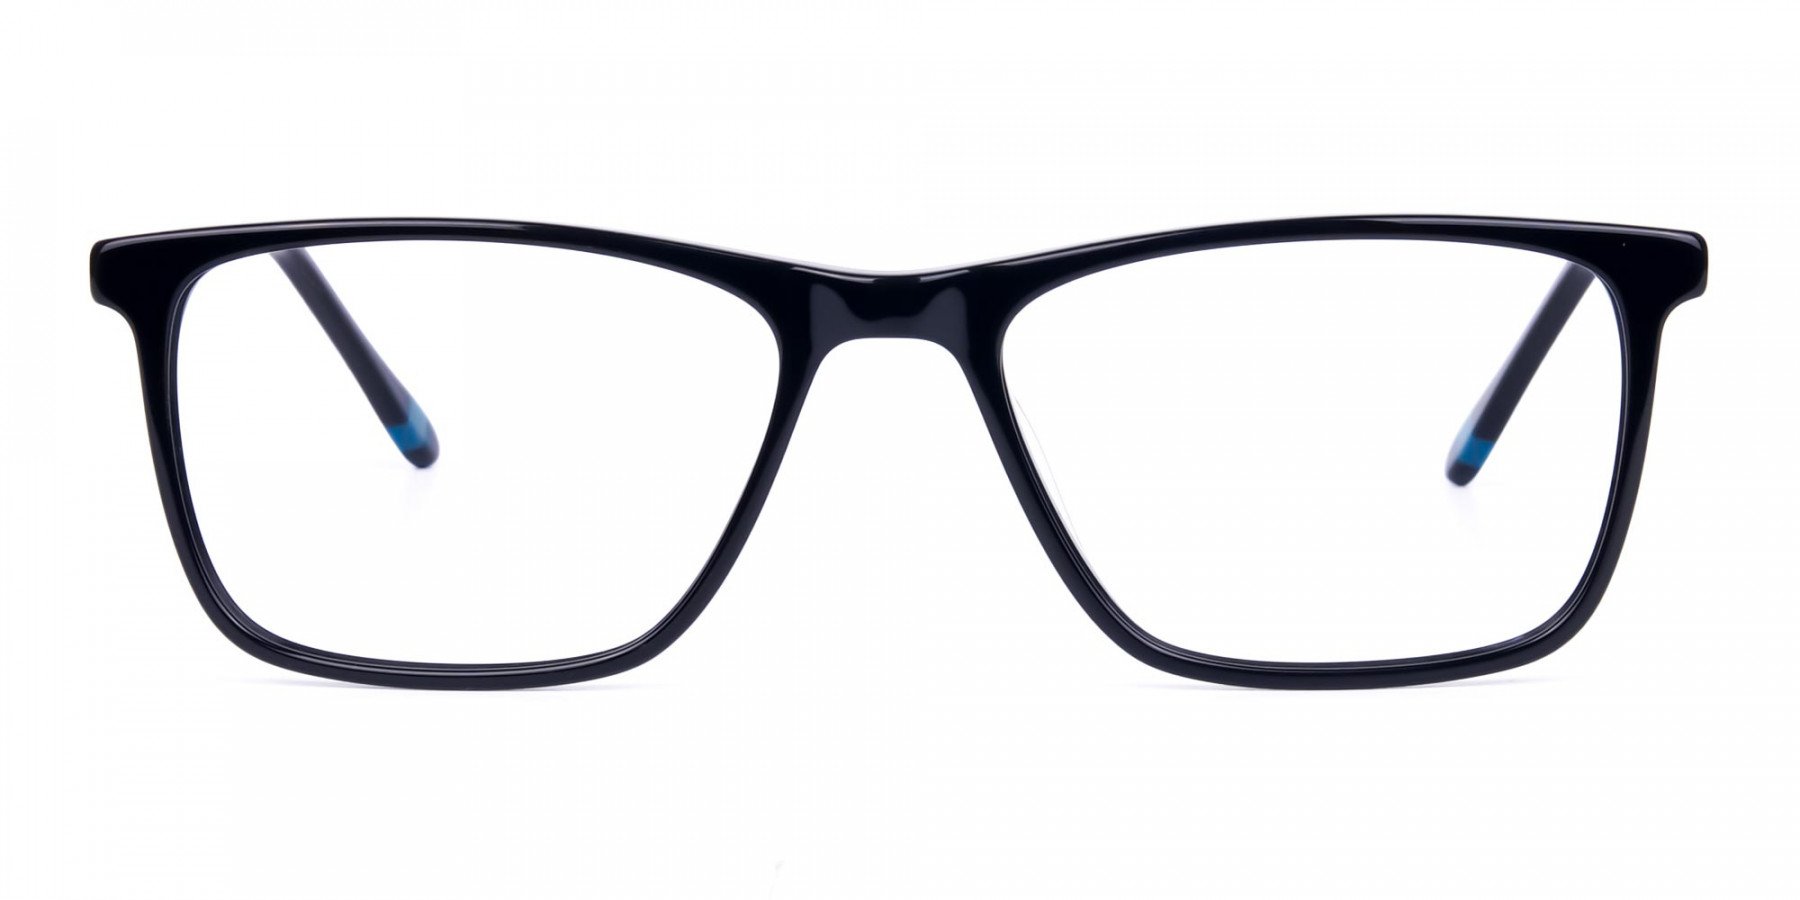 Teal & black rectangular glasses